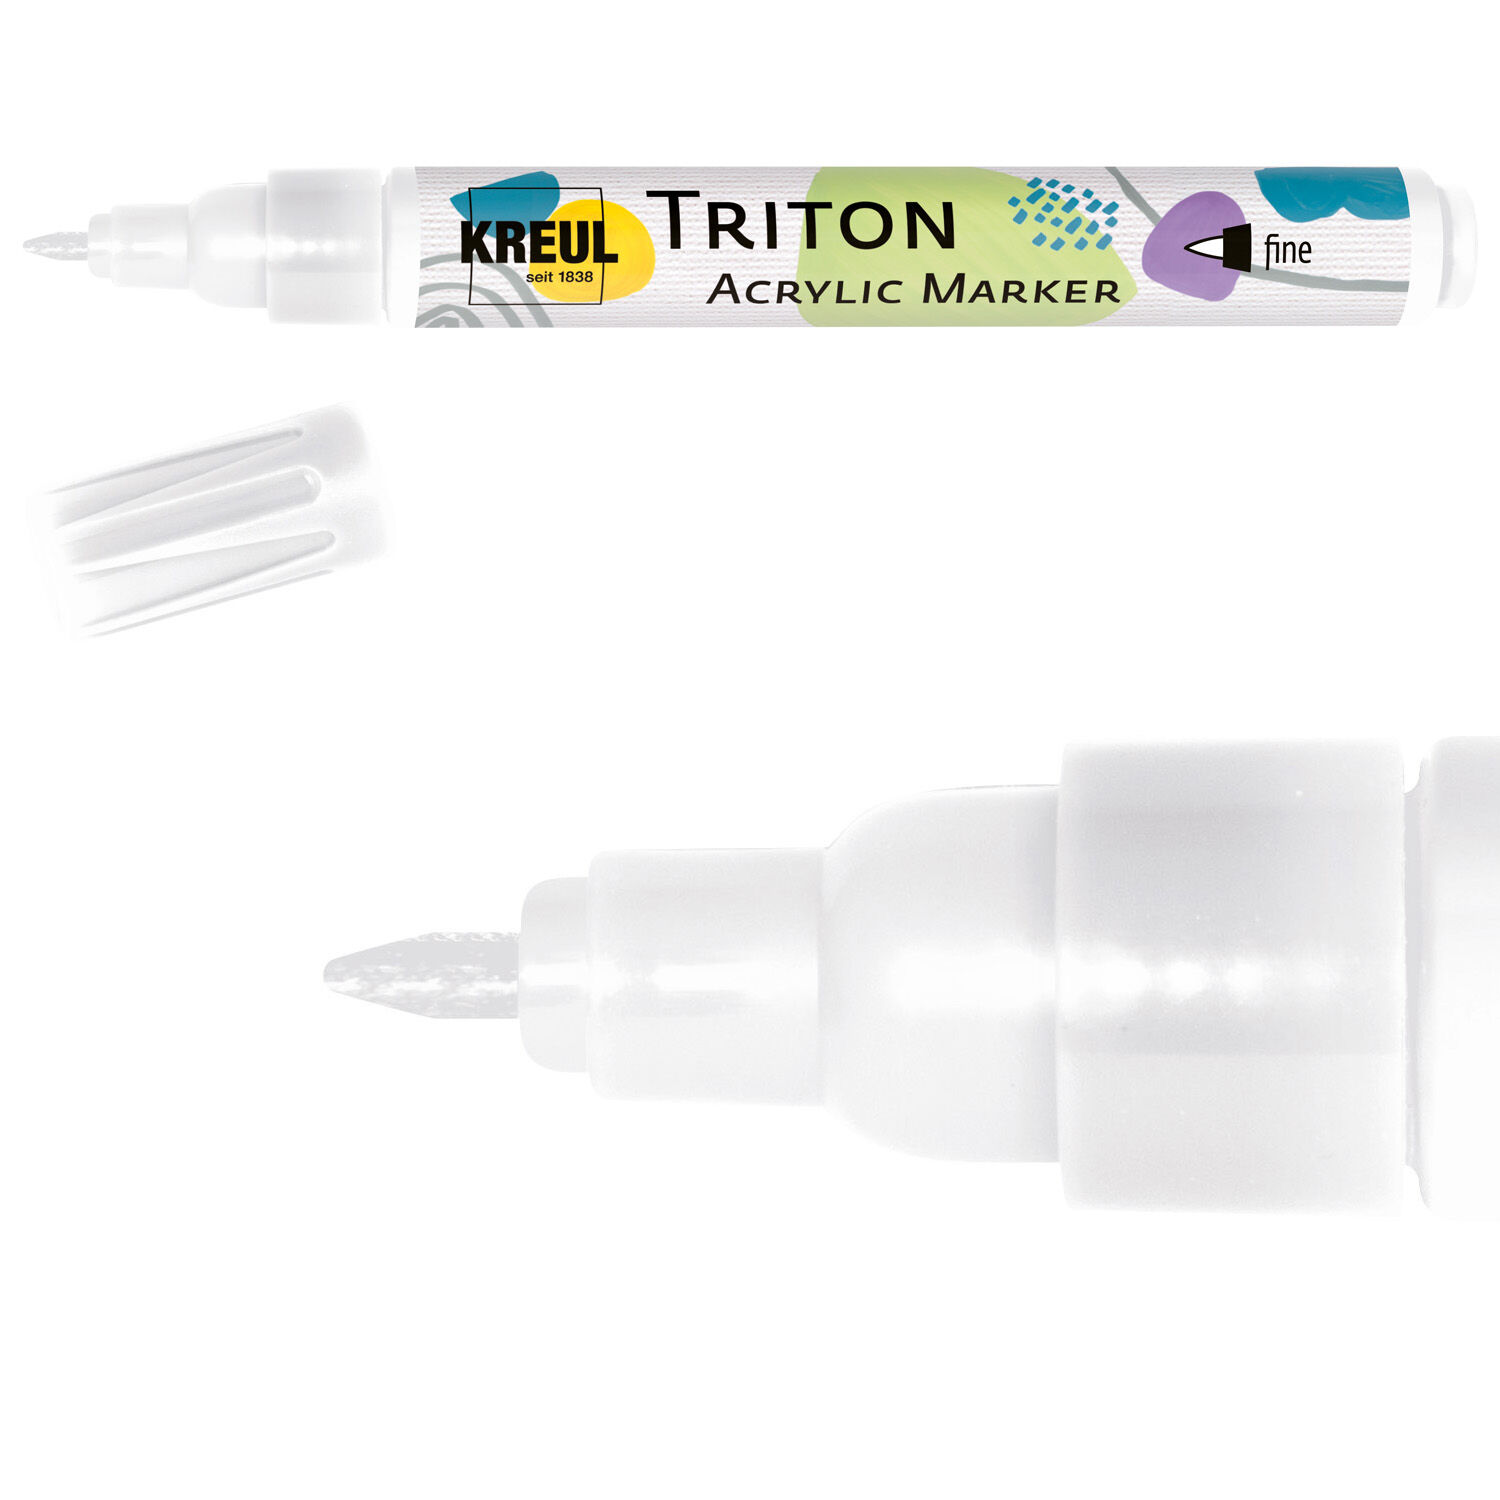 NEU Kreul Triton Acrylic Marker / Acrylstift, Fine 1-2 mm, Weiß